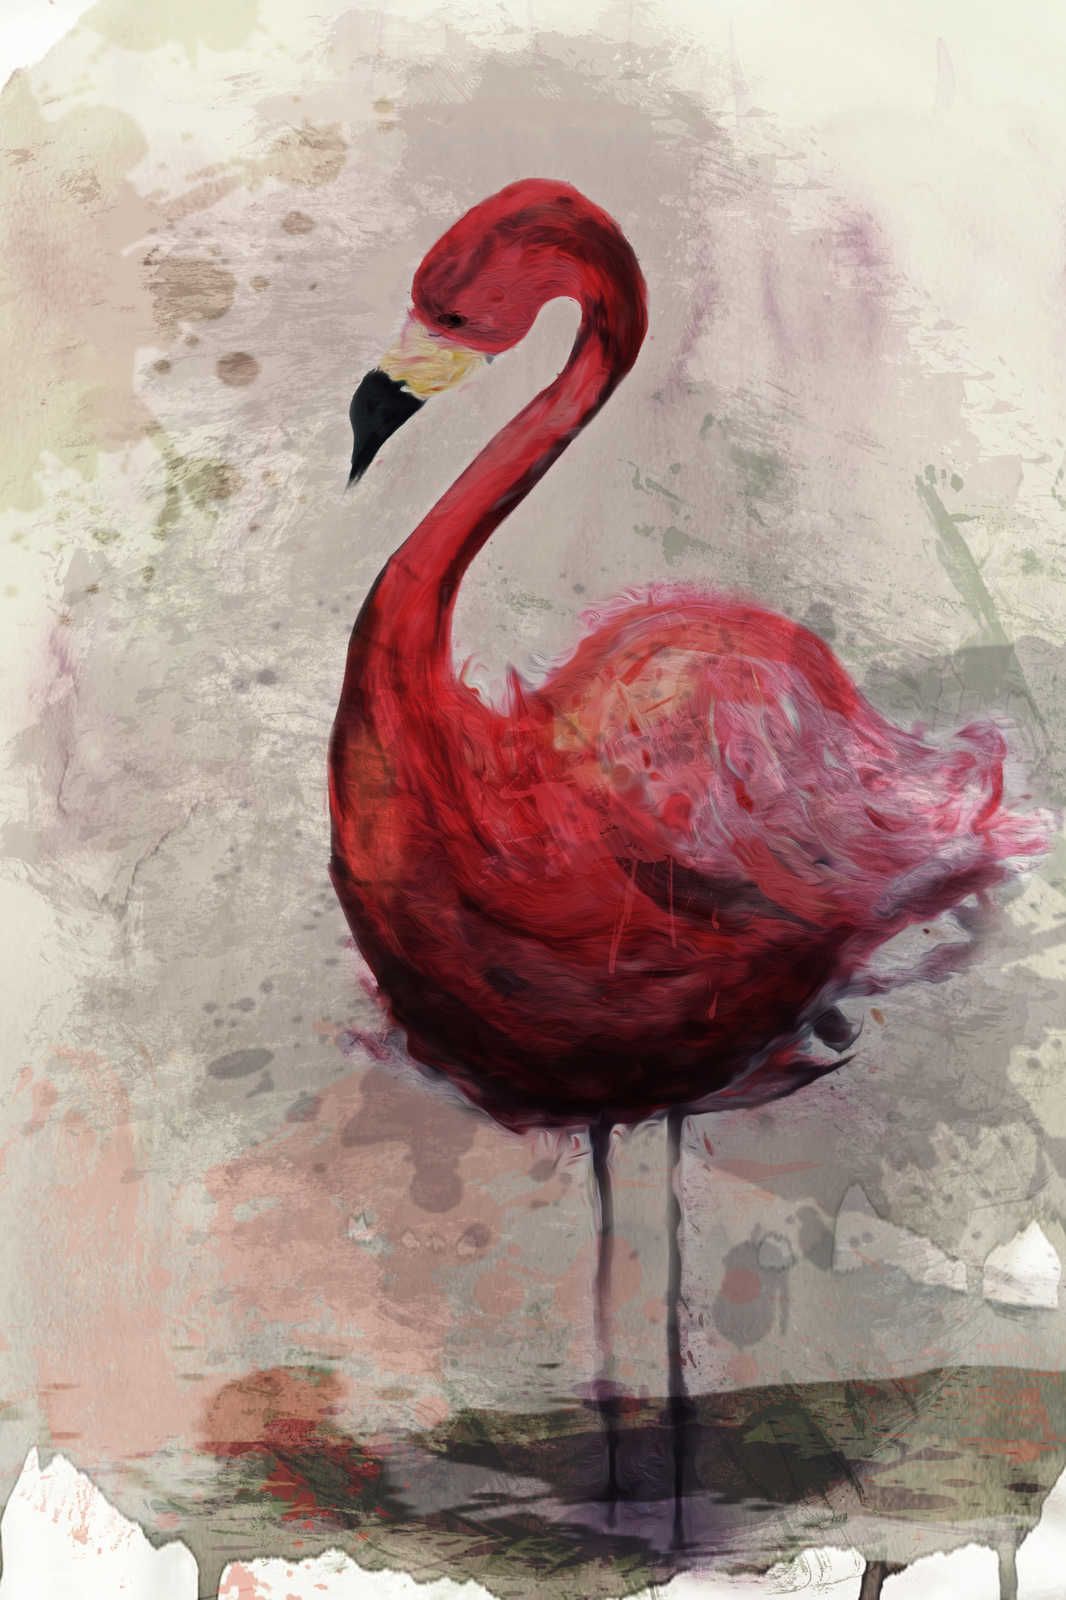             Aquarelles Leinwandbild mit Flamingo Motiv im Zeichenstil – 1,20 m x 0,80 m
        